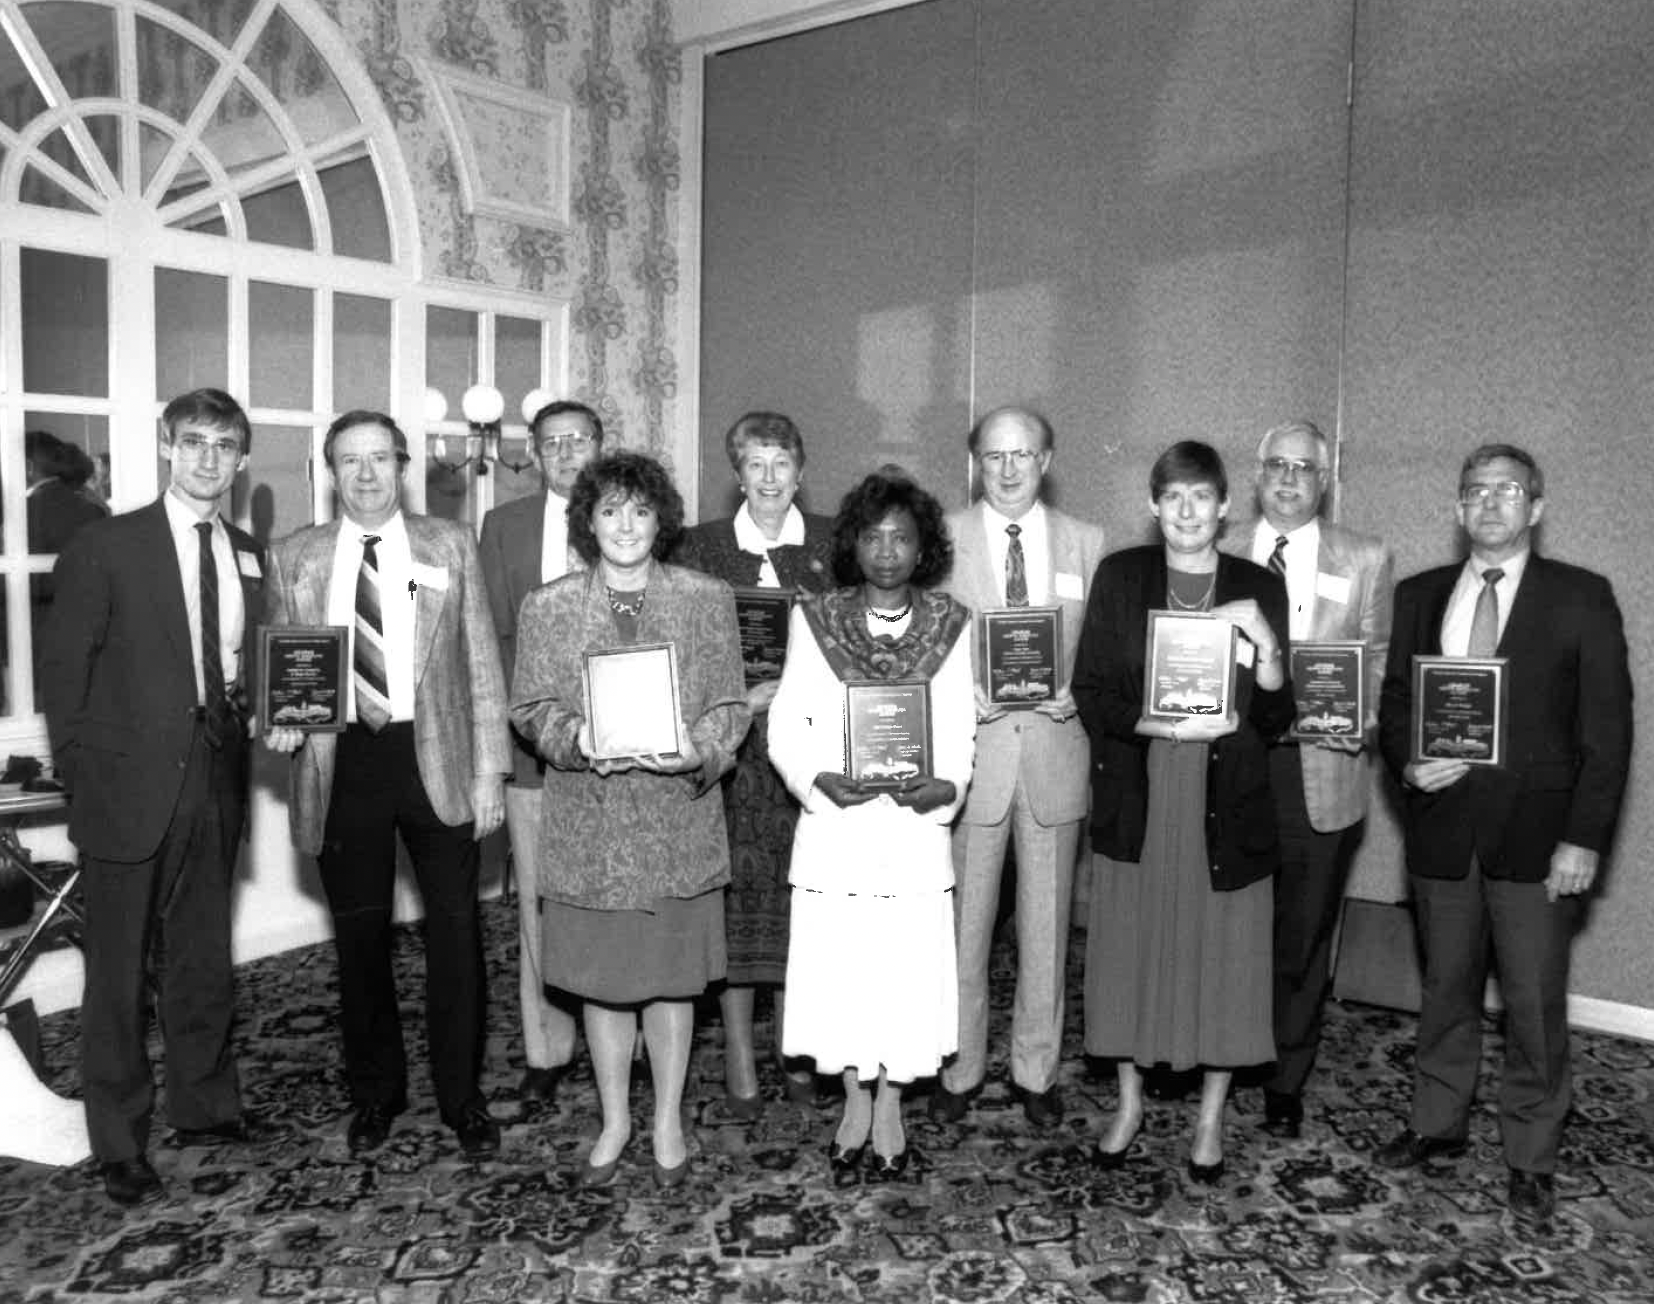 Dewey and Rick at the NC Housing Awards in 1989